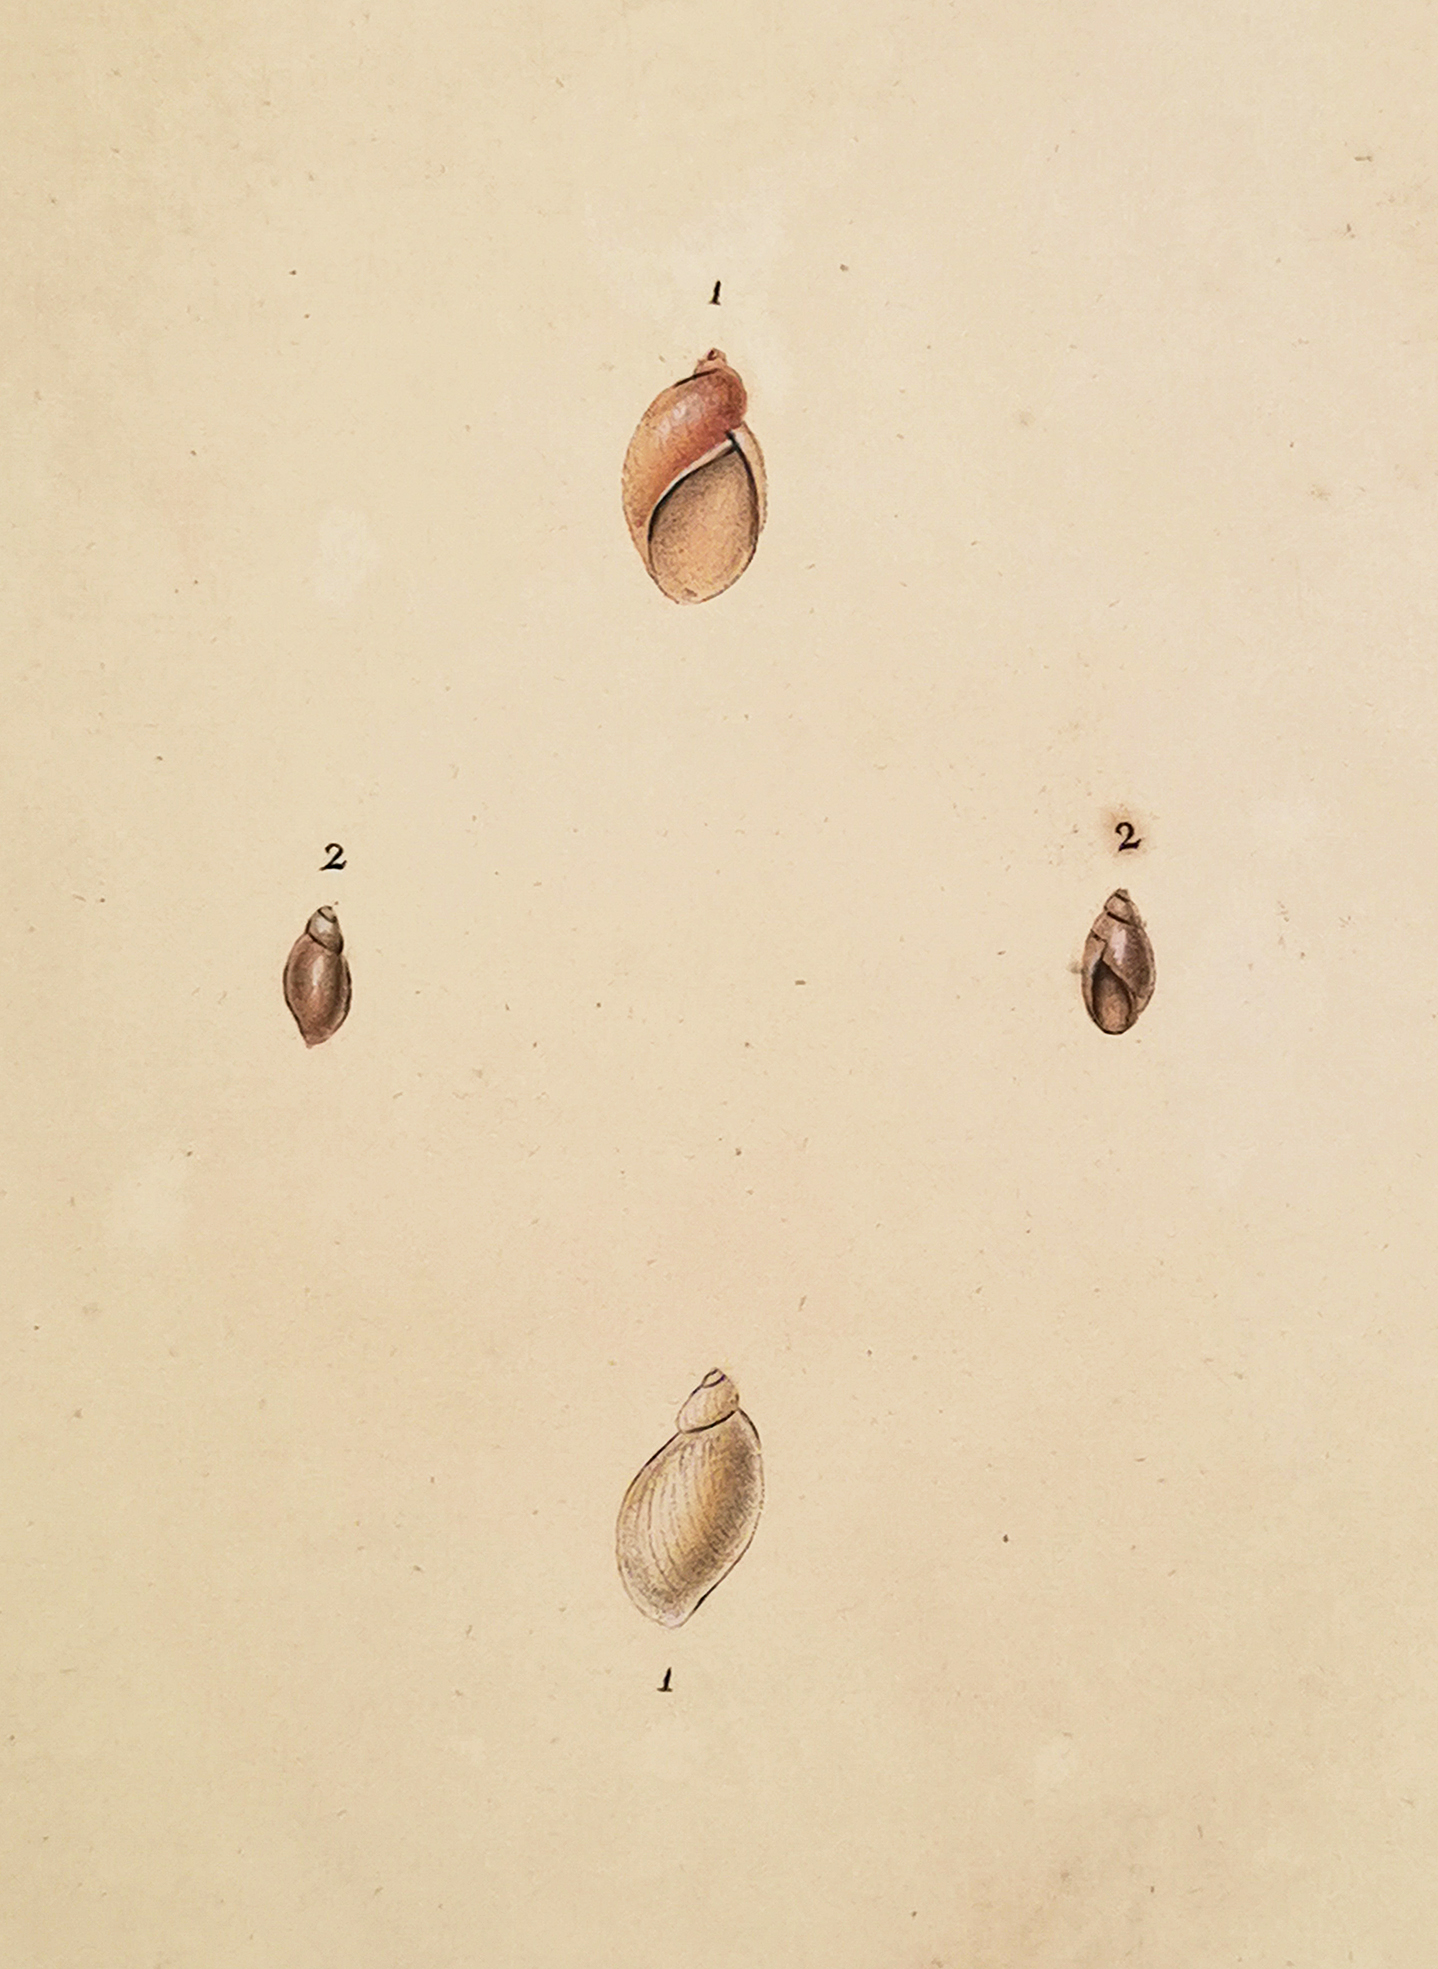 Mud-Snail. 1. Succinea Putris. 2. Physa Fontinalis. - Antique Print from 1790